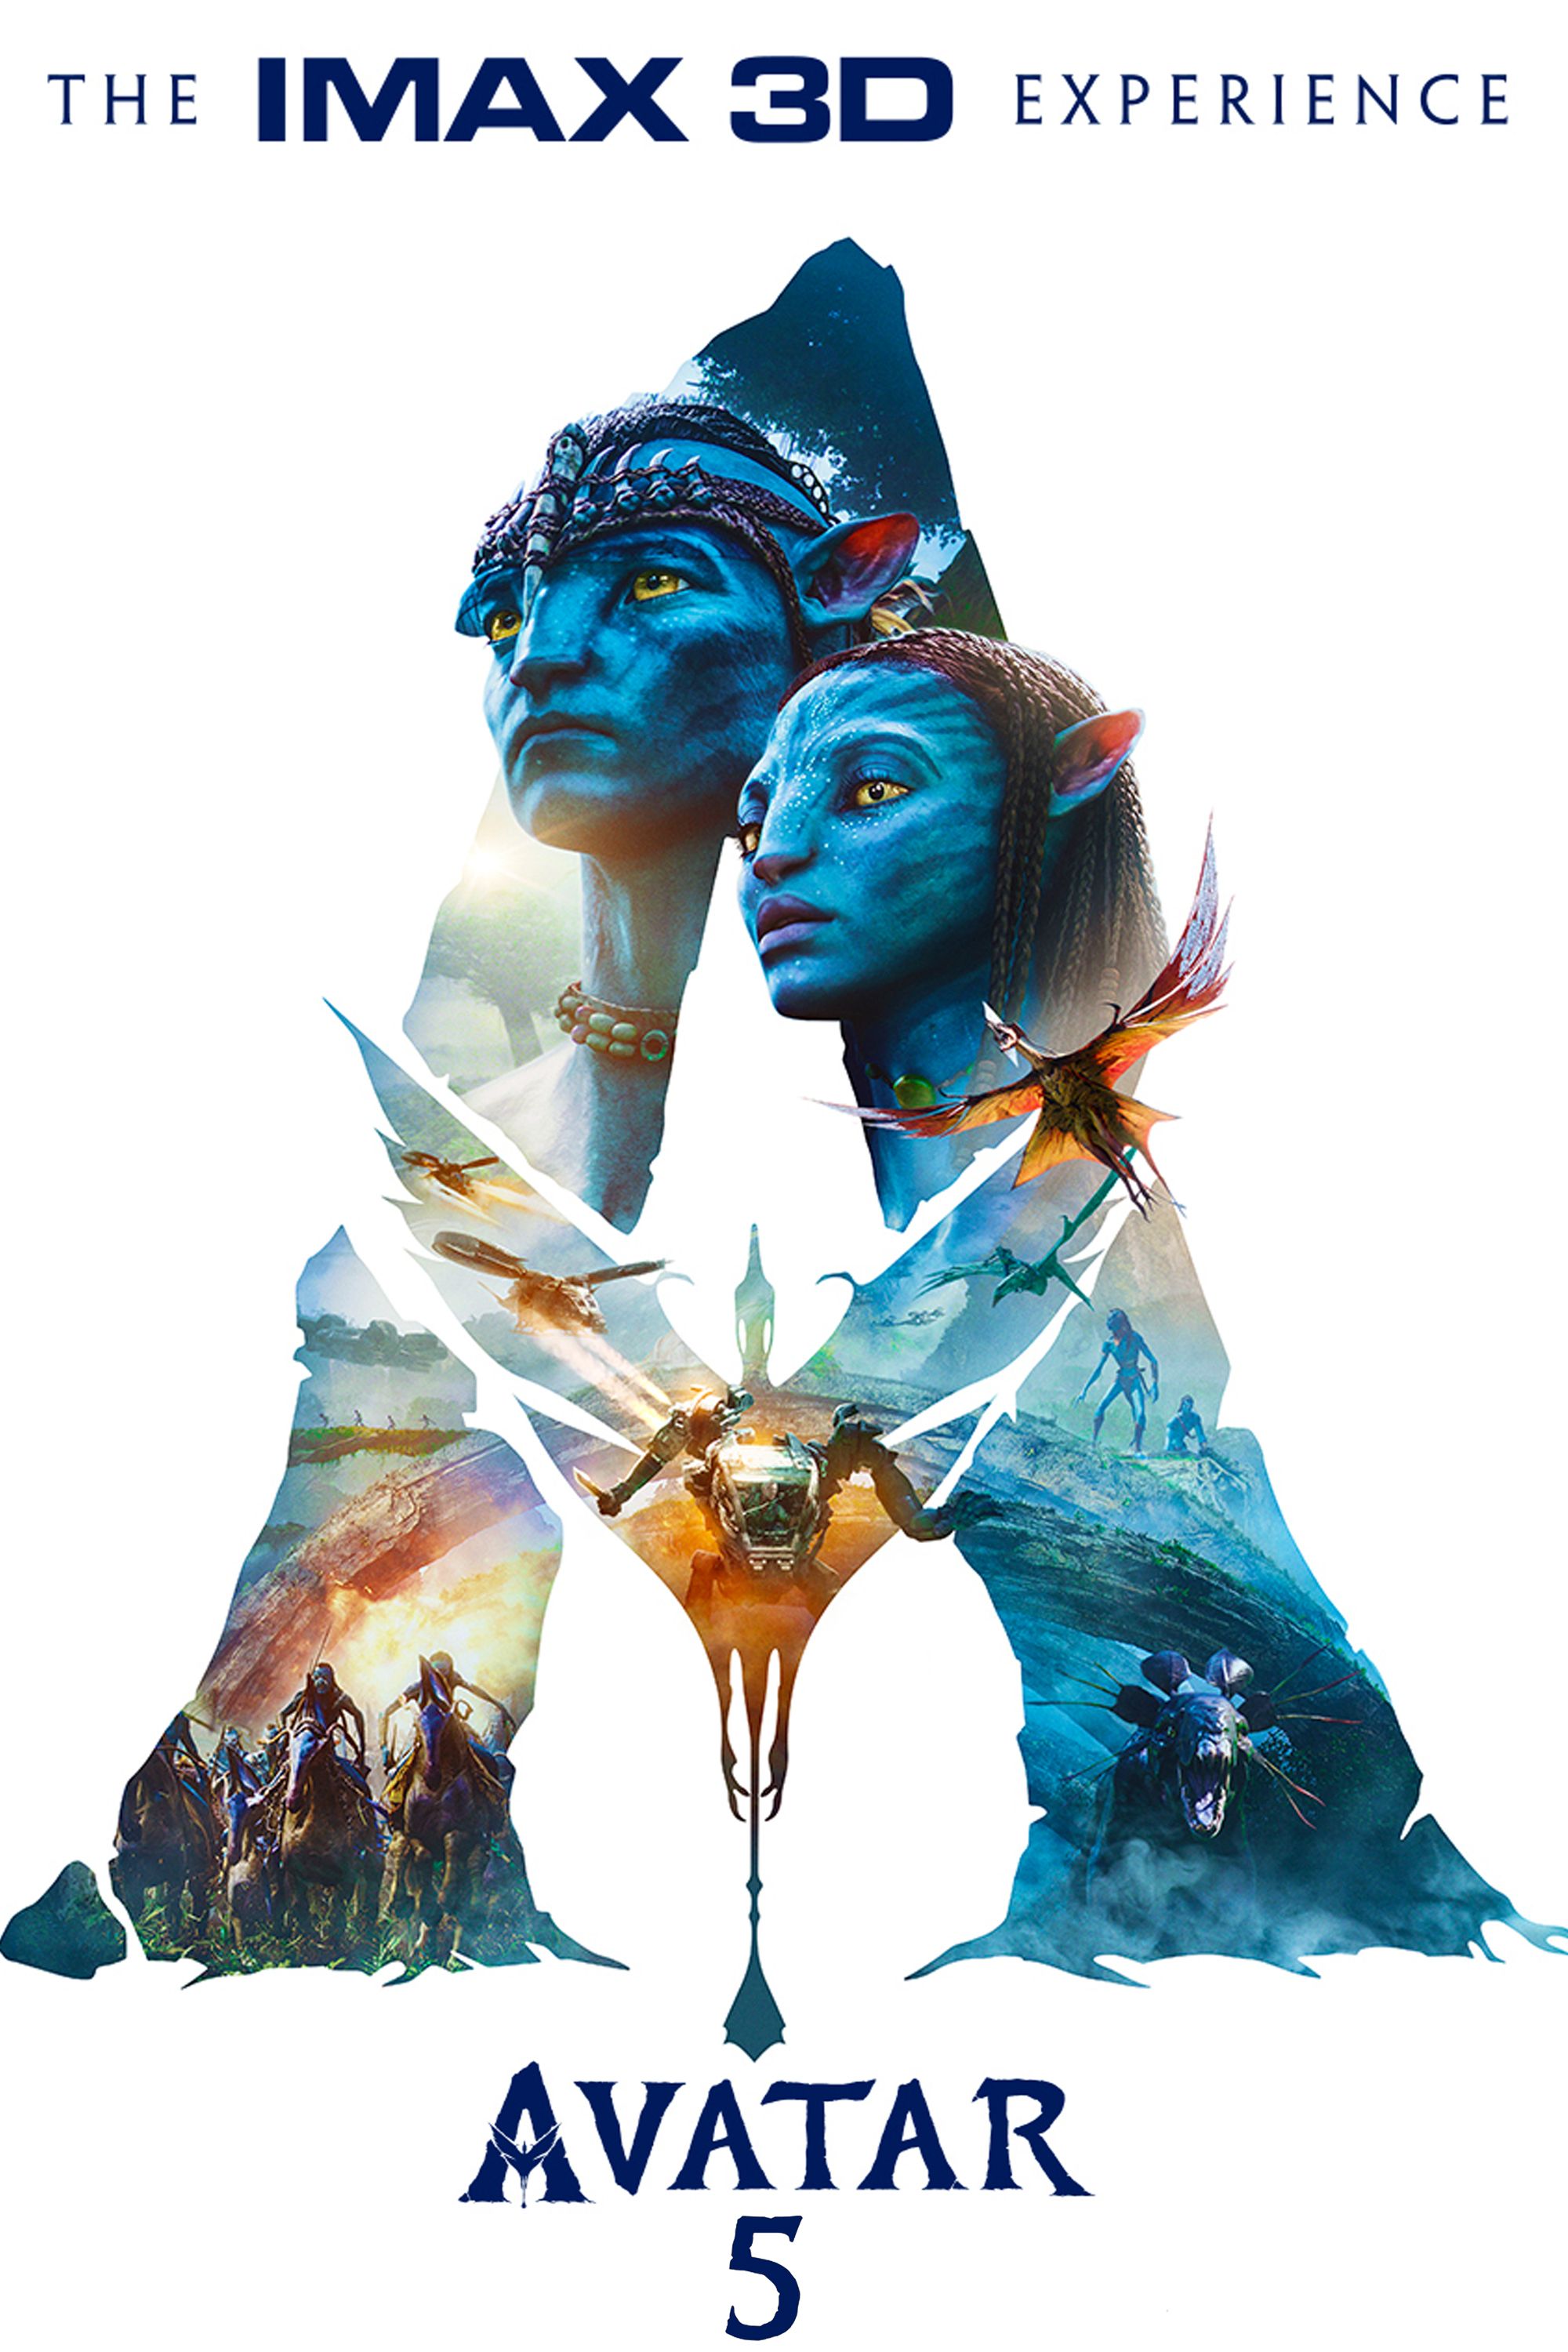 Avatar 5 Poster